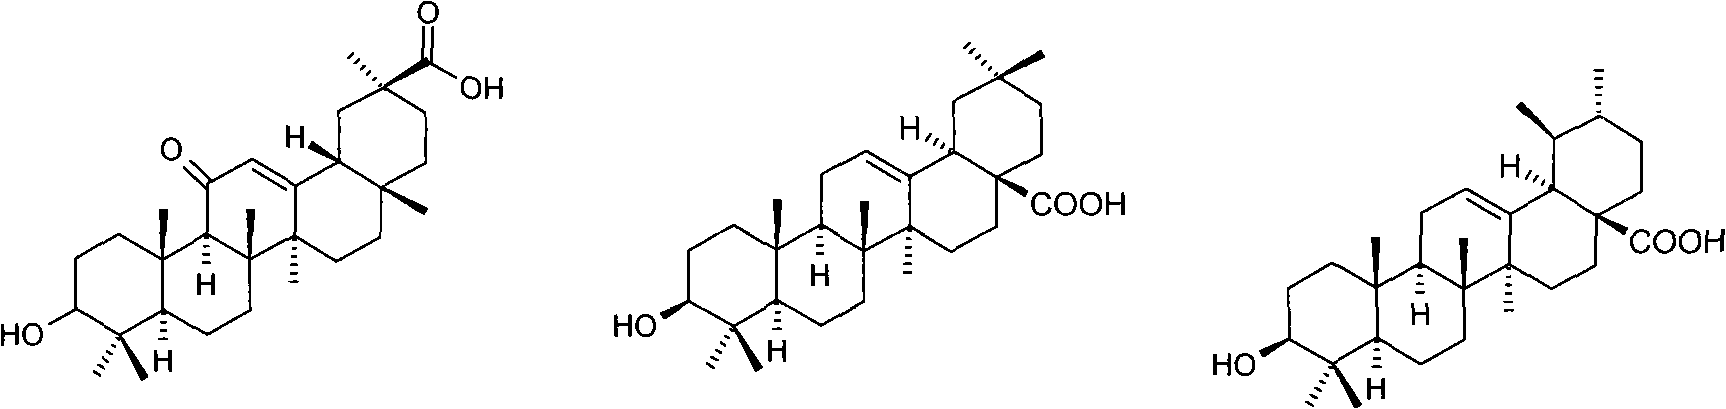 Amino acid conjugate prodrug of pentacyclic triterpenoid and medical application thereof